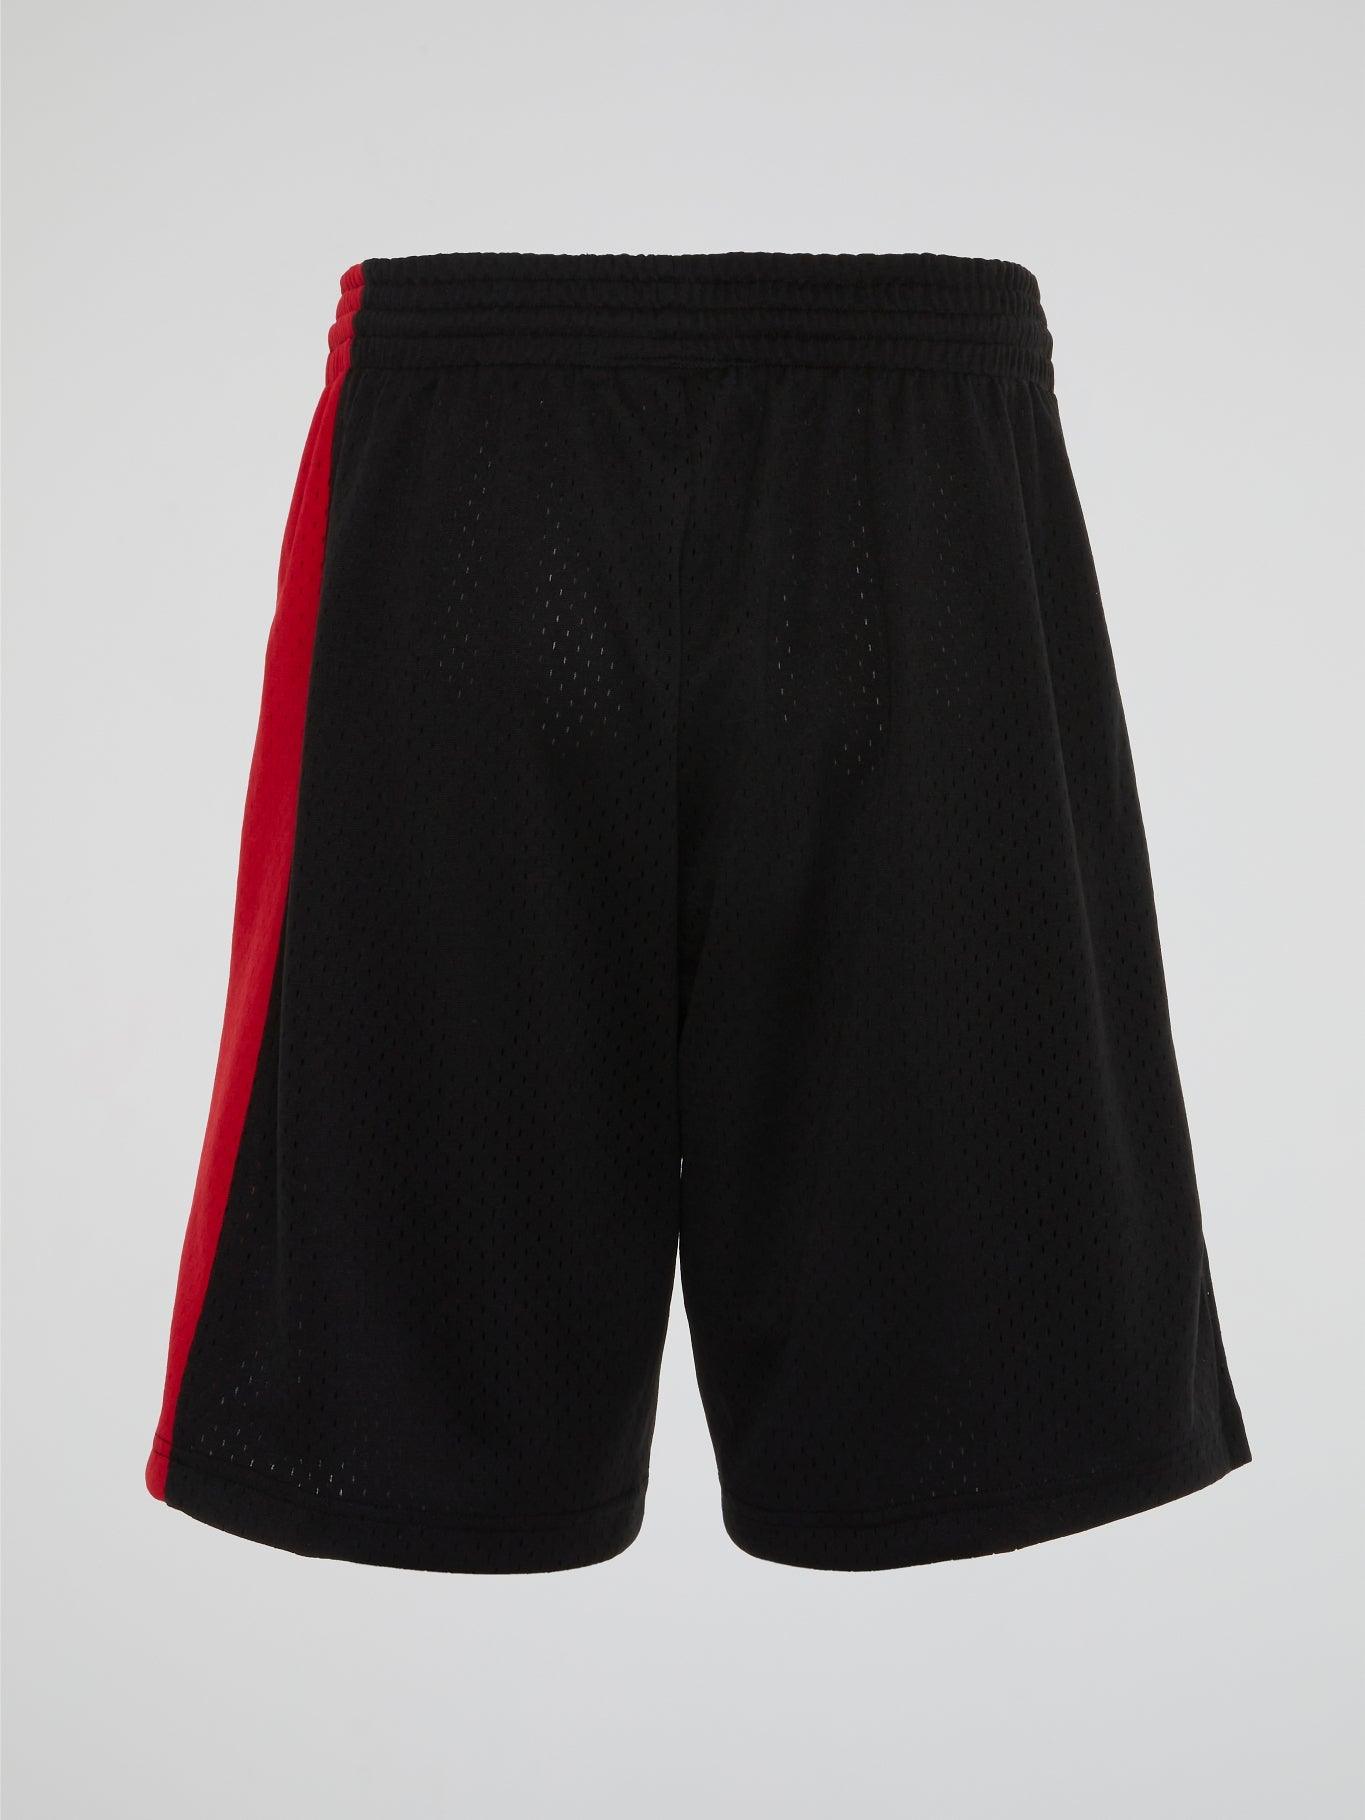 NBA Swingman Road Shorts Blazers 99-00 - Black - B-Hype Society